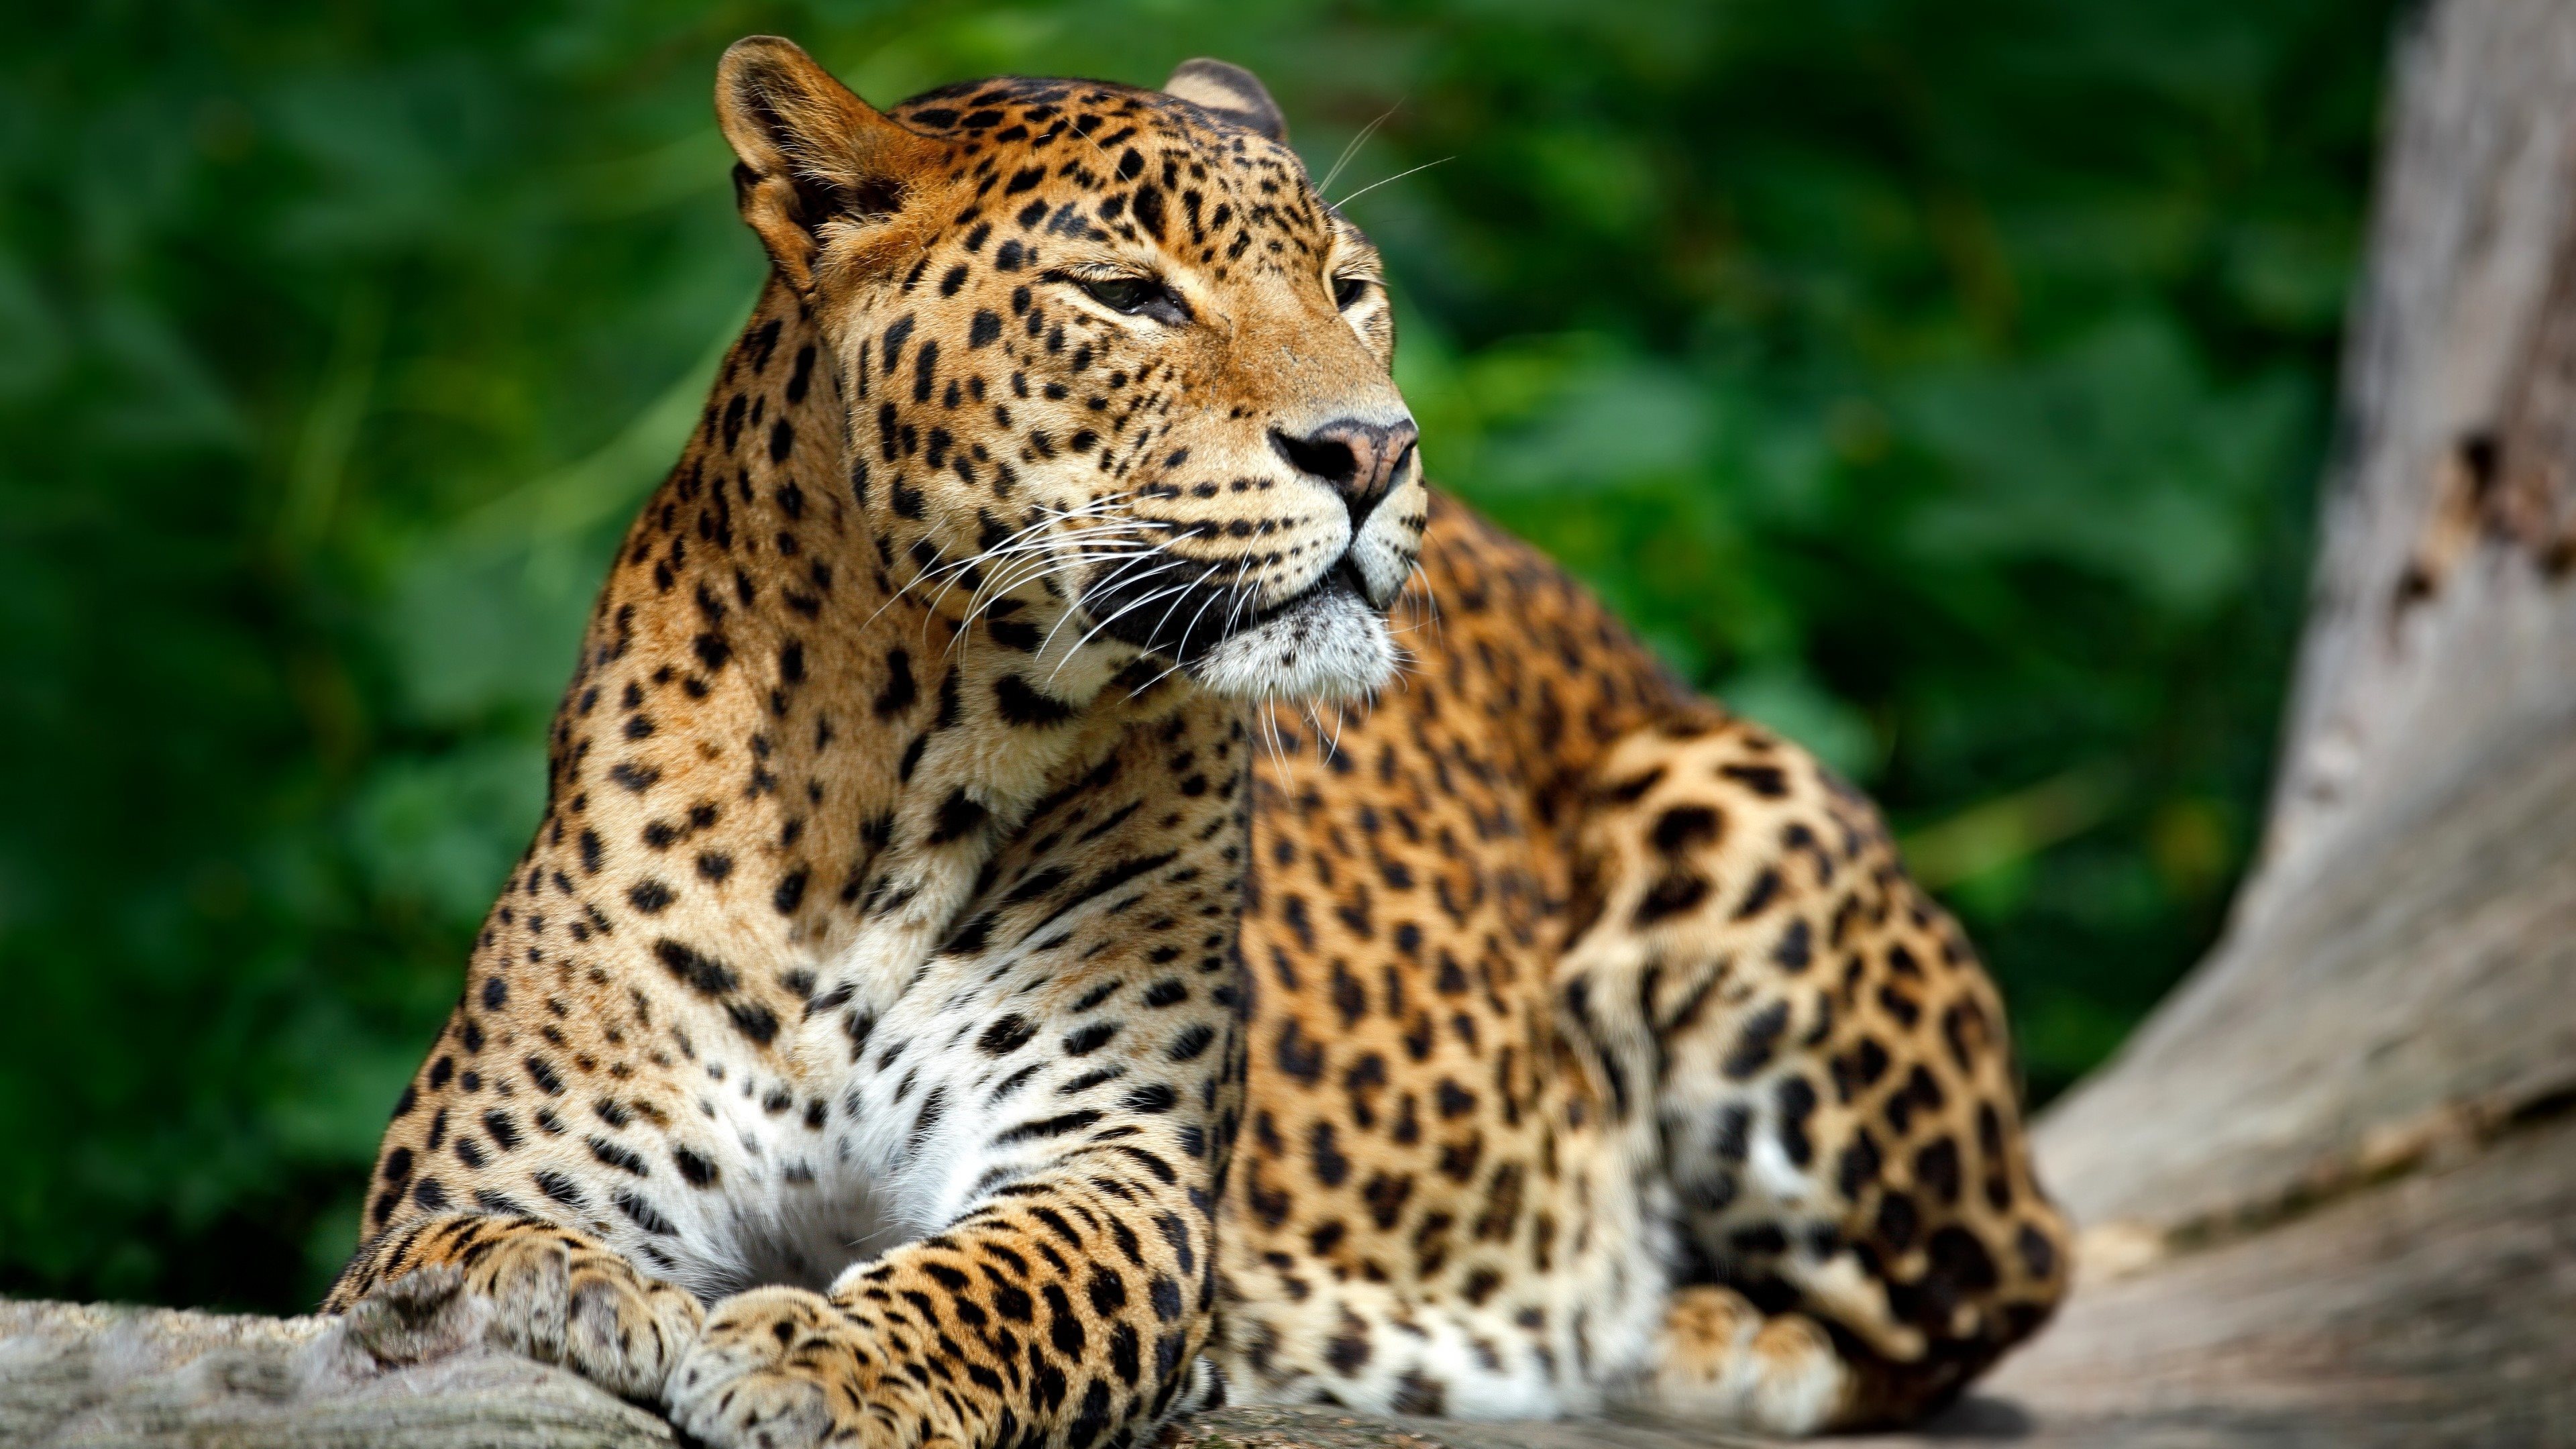 HD wallpaper, Desktop 4K Leopard Background Photo, High Quality Pictures, 3840X2160 4K Desktop, Leopard Wildlife Predators